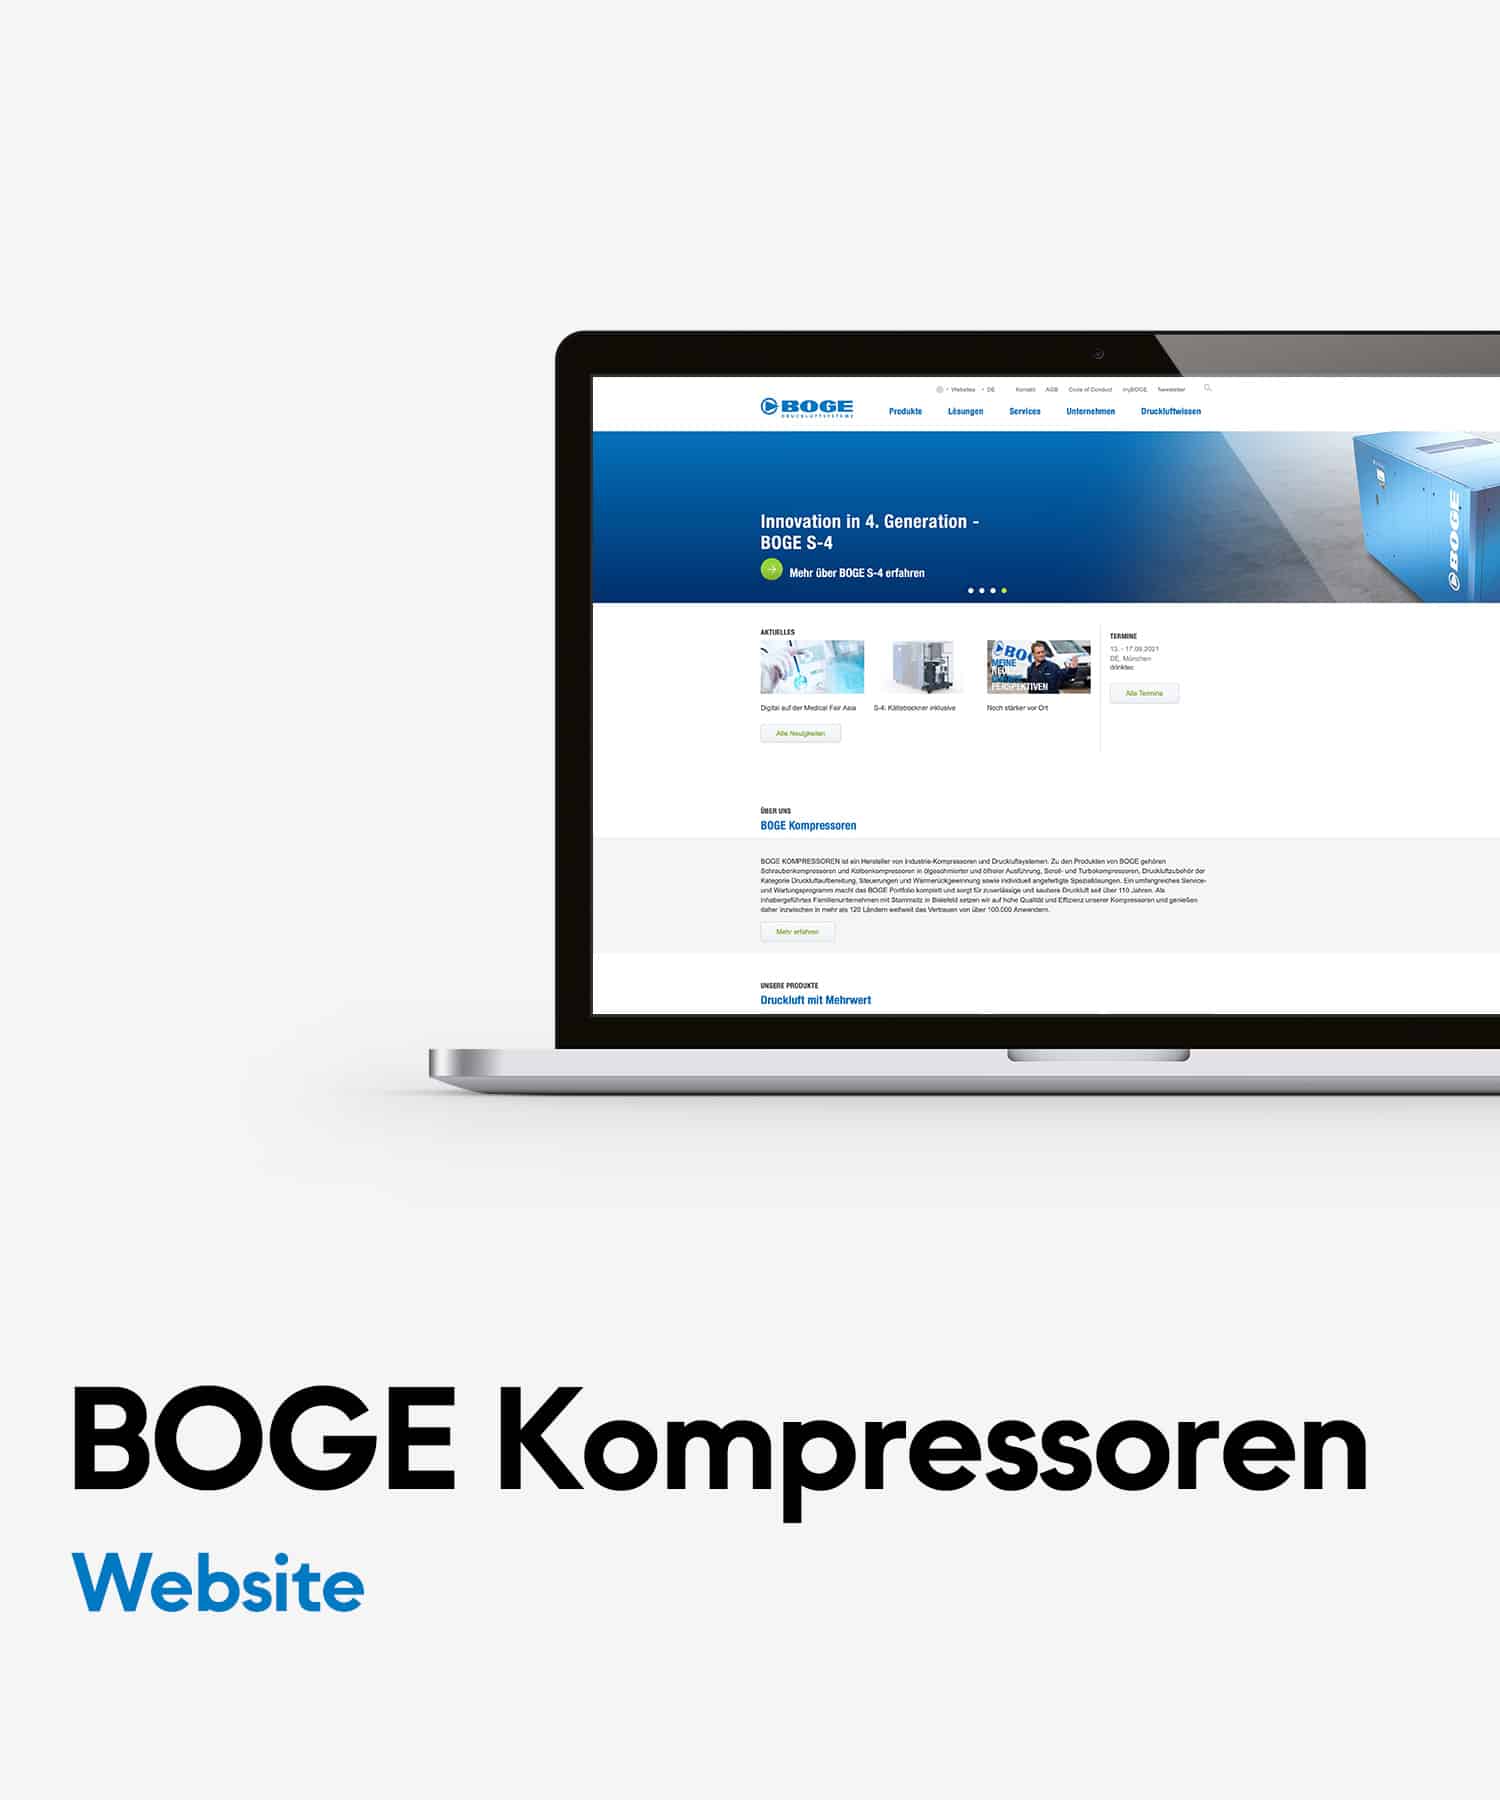 BOGE Kompressoren Otto Boge GmbH & Co KG